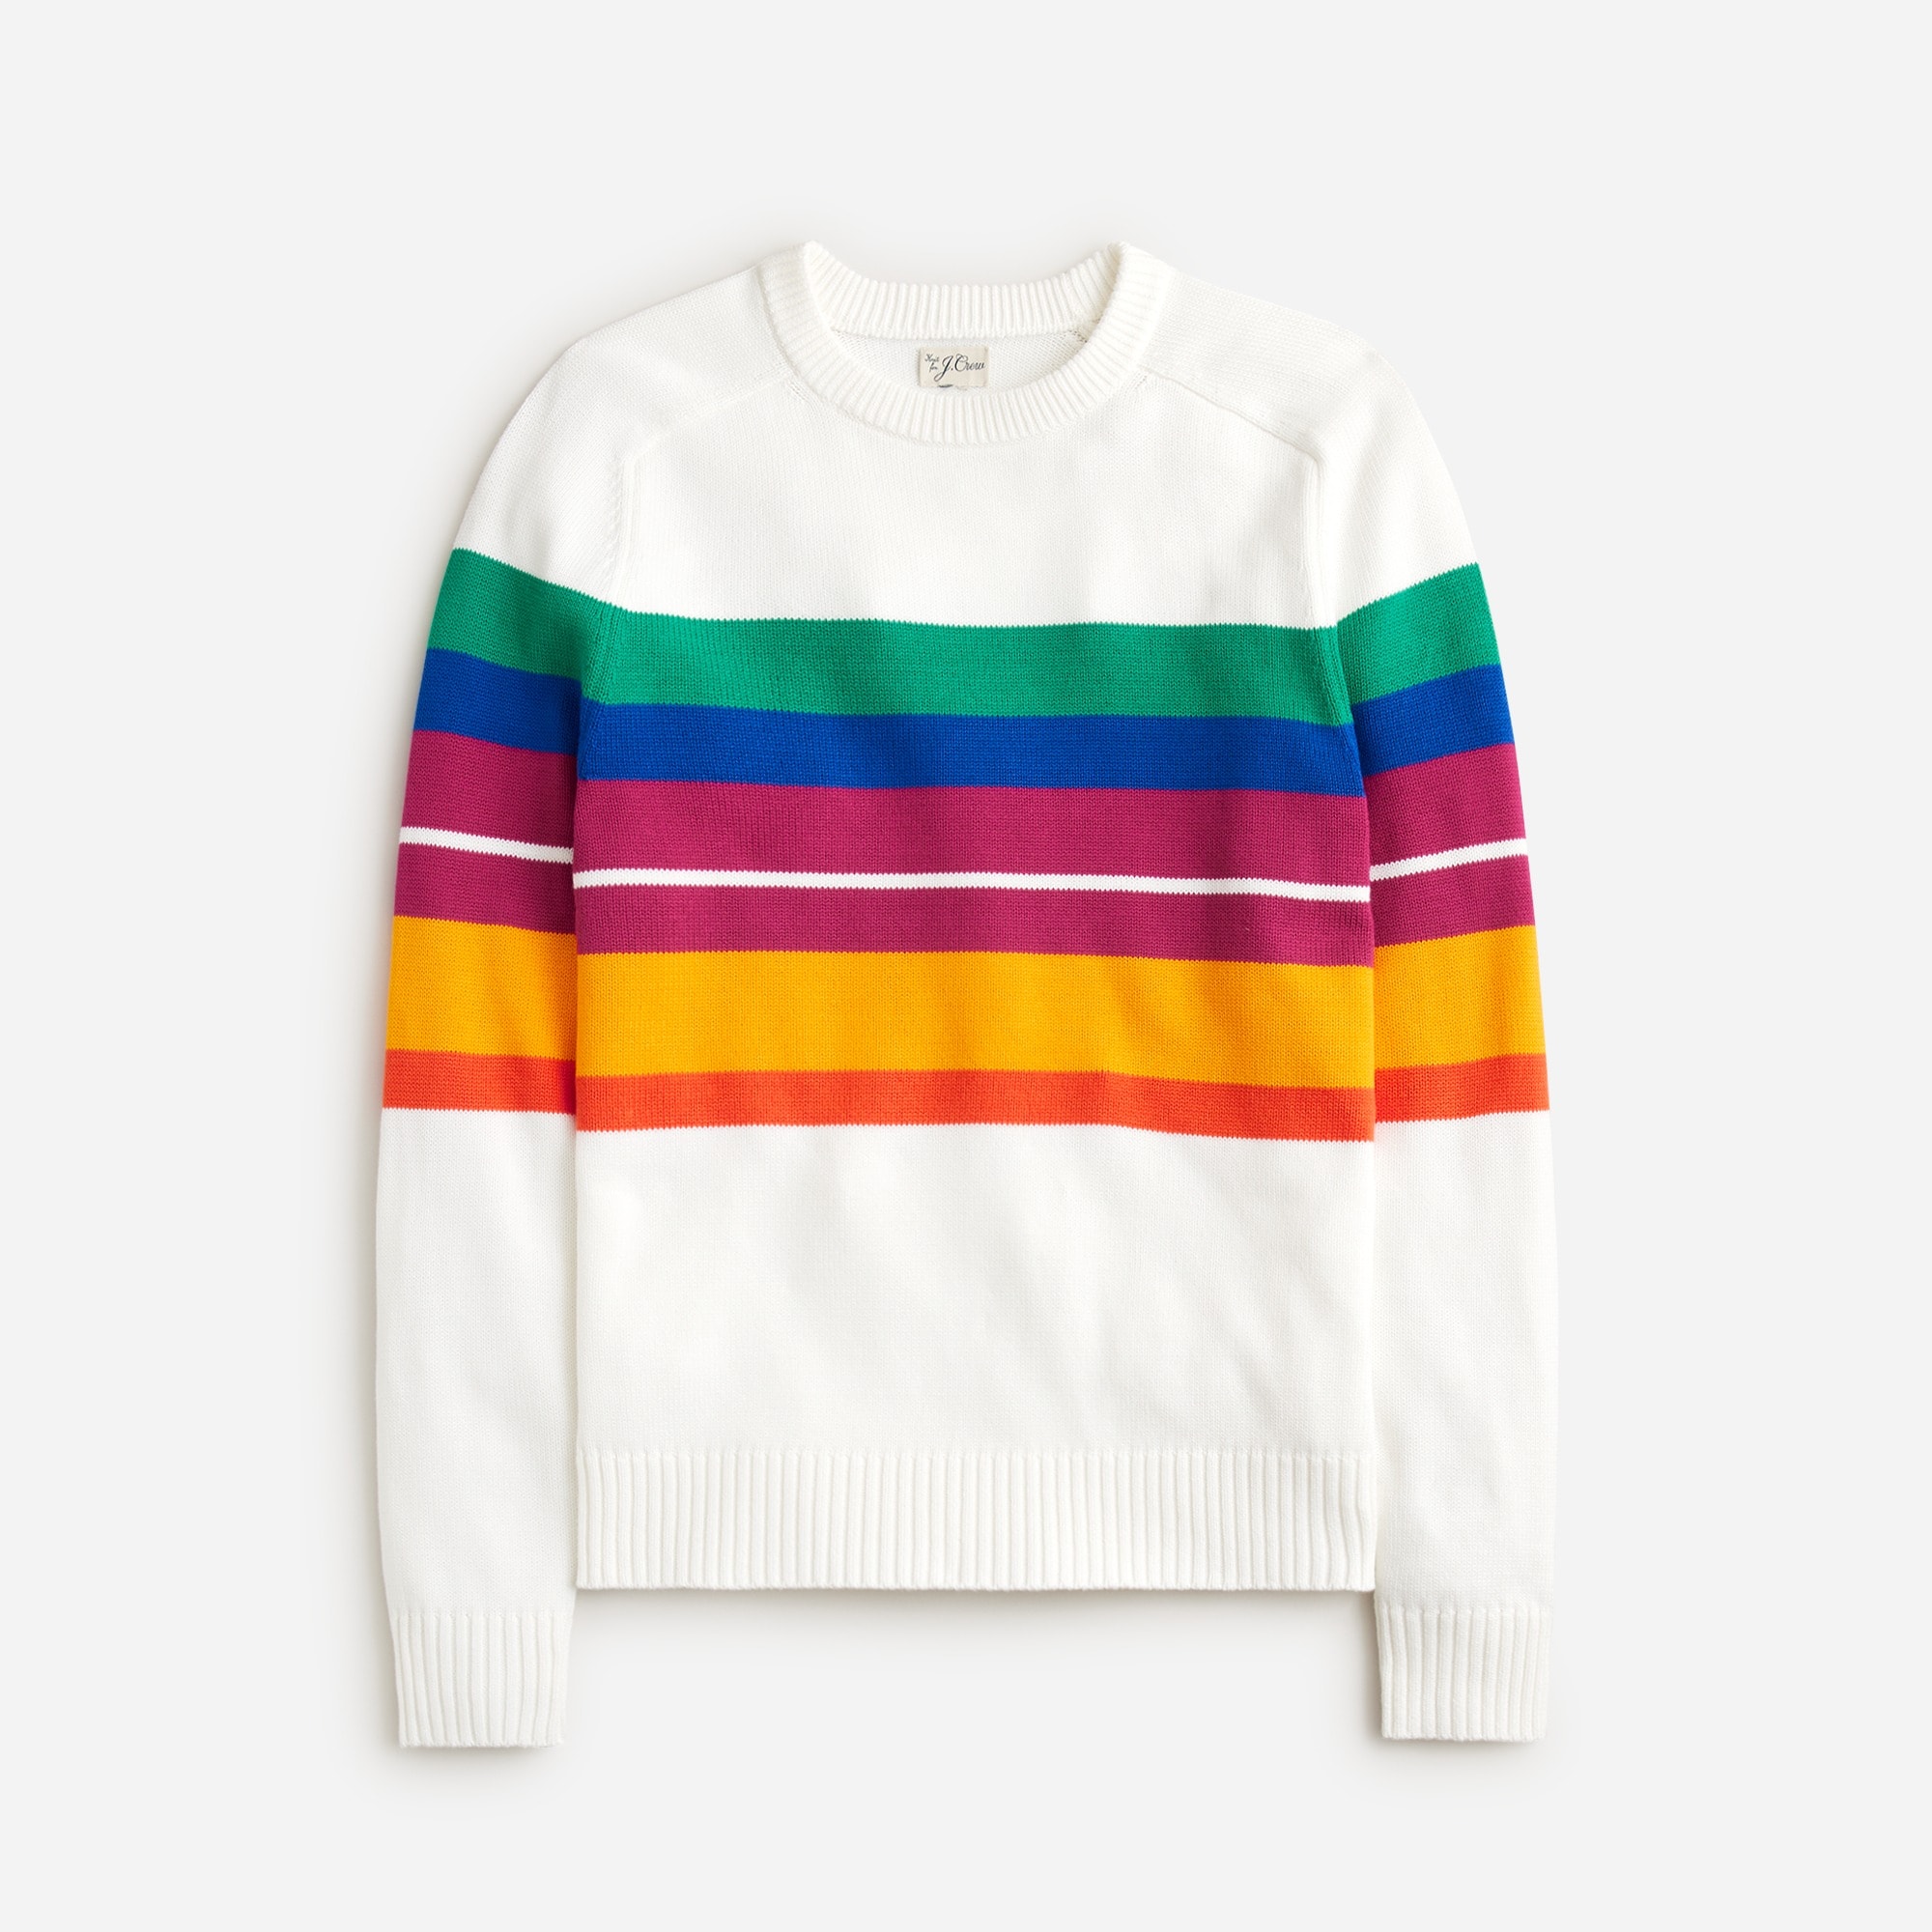 mens Heritage cotton sweater in stripe